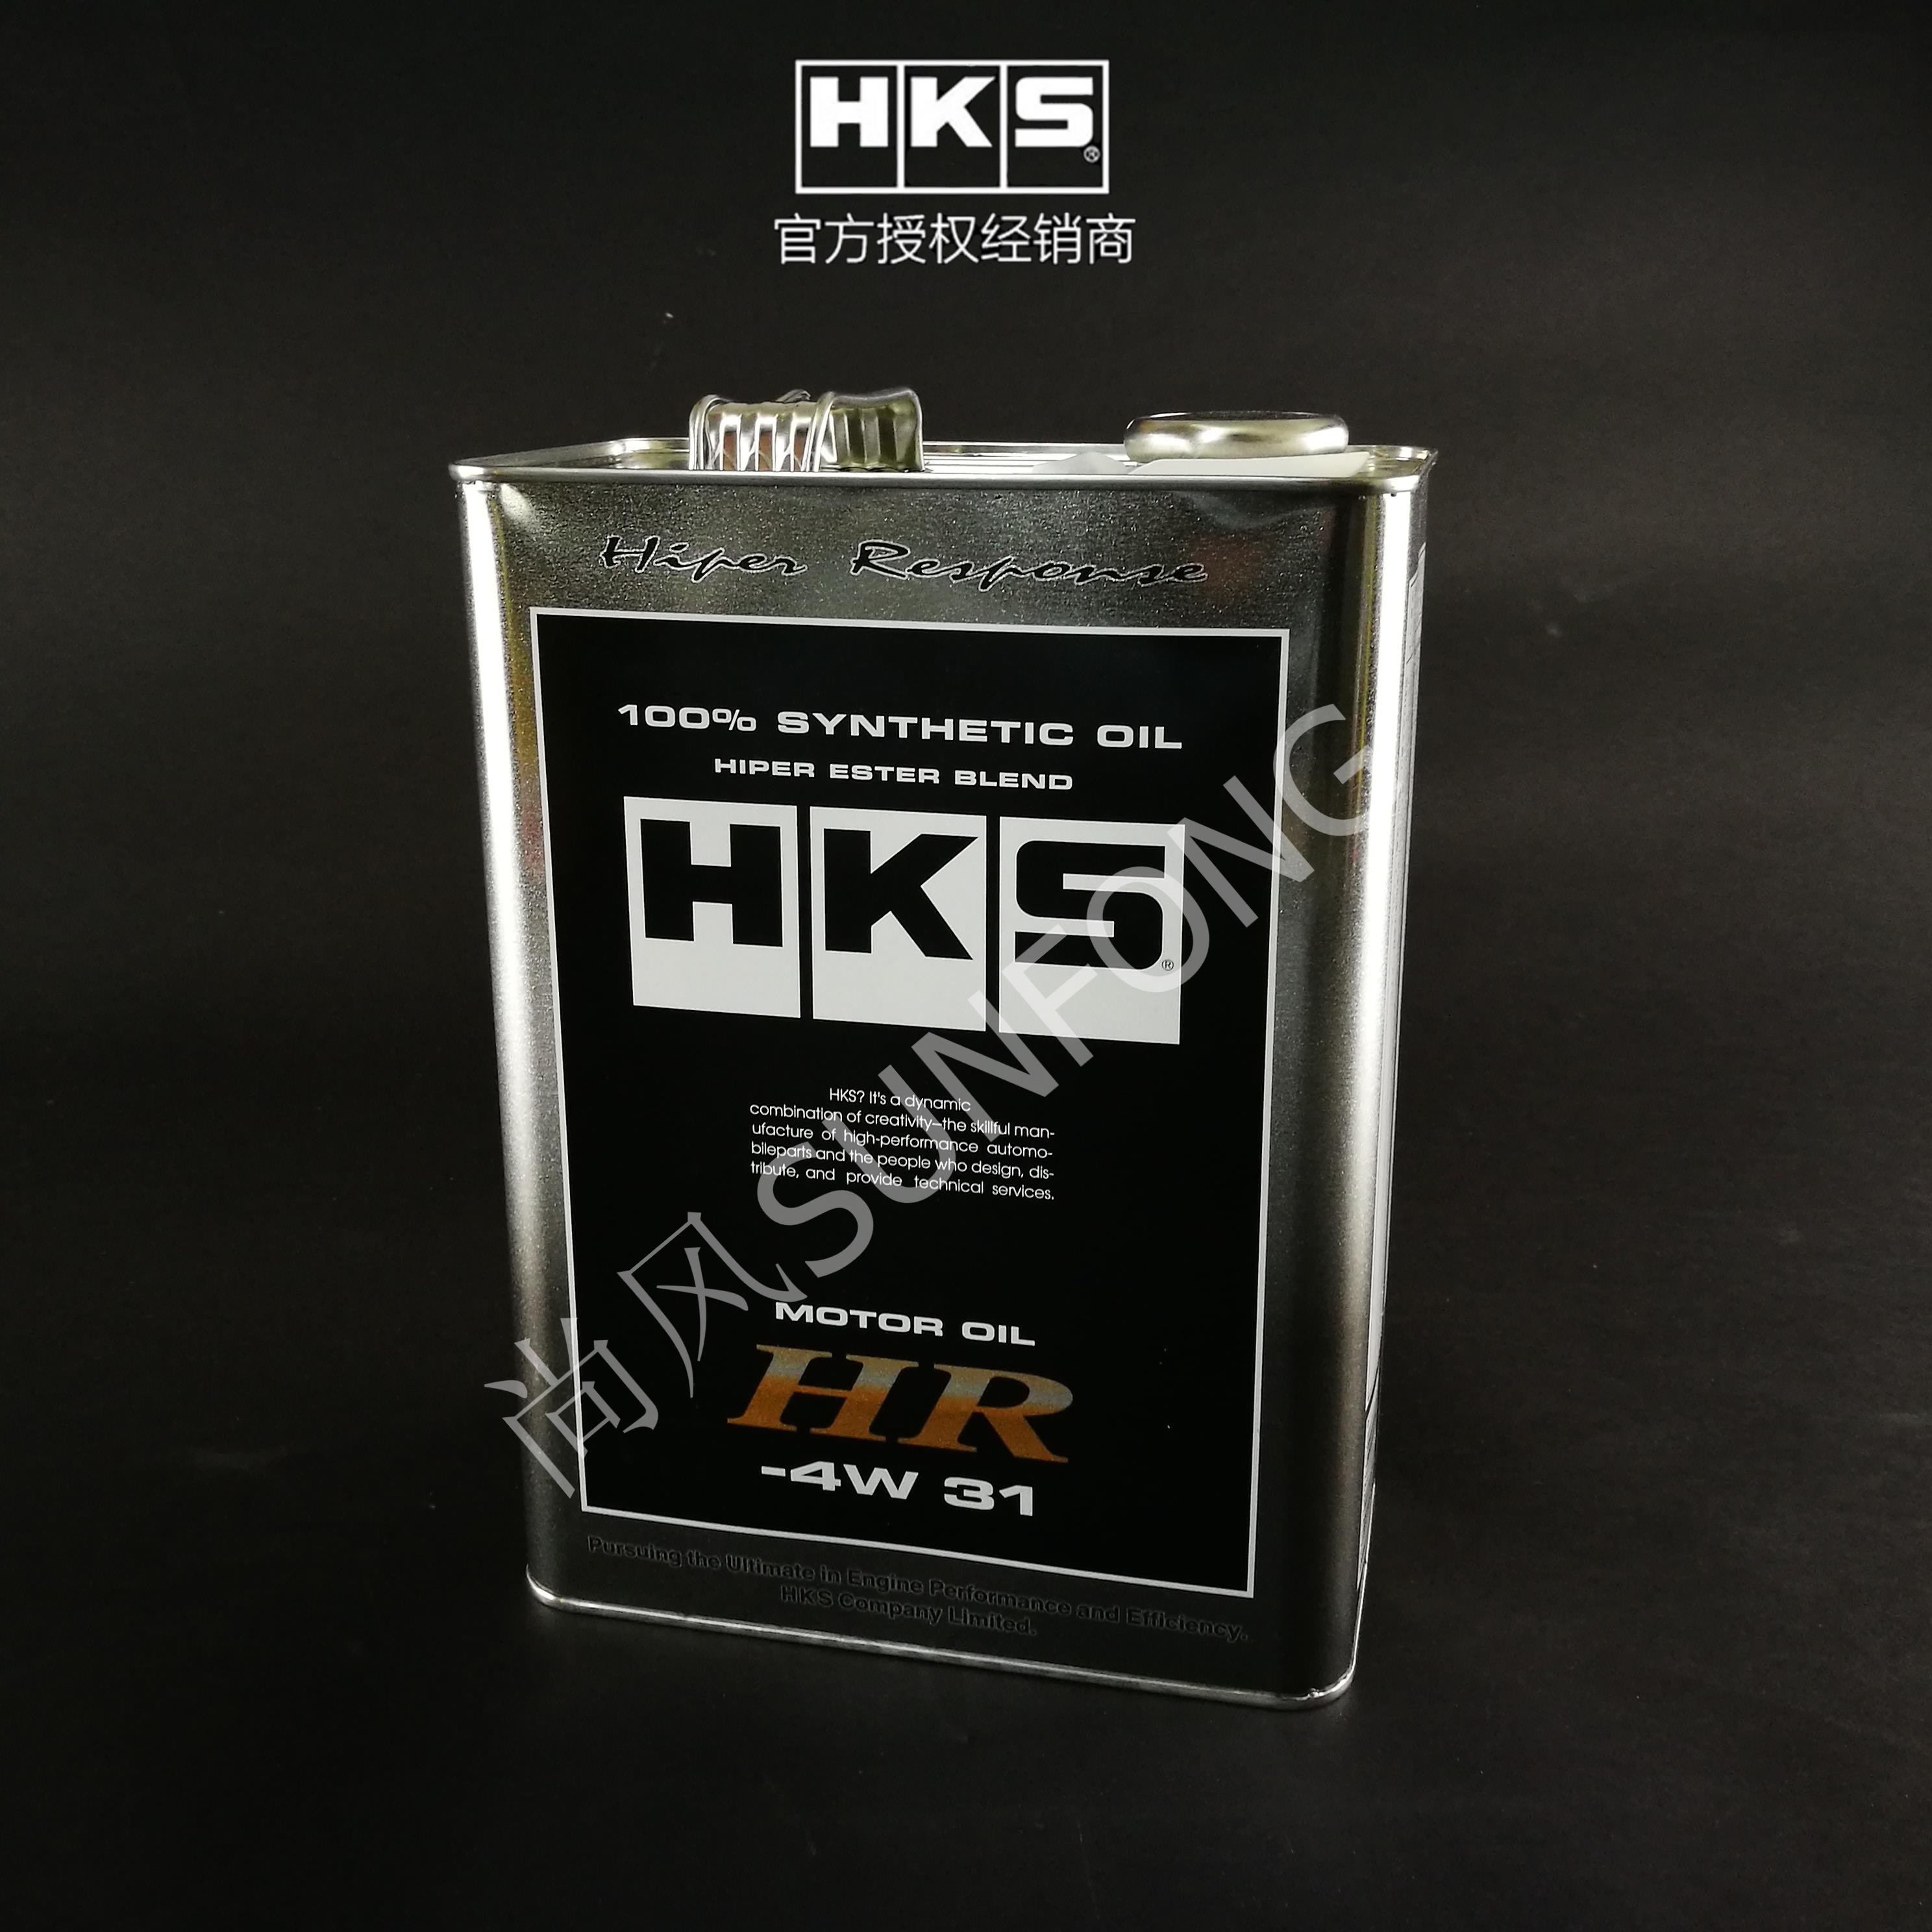 HKS日本进口HR自吸机增发动机专用酯类全合成机油-4W31润滑油